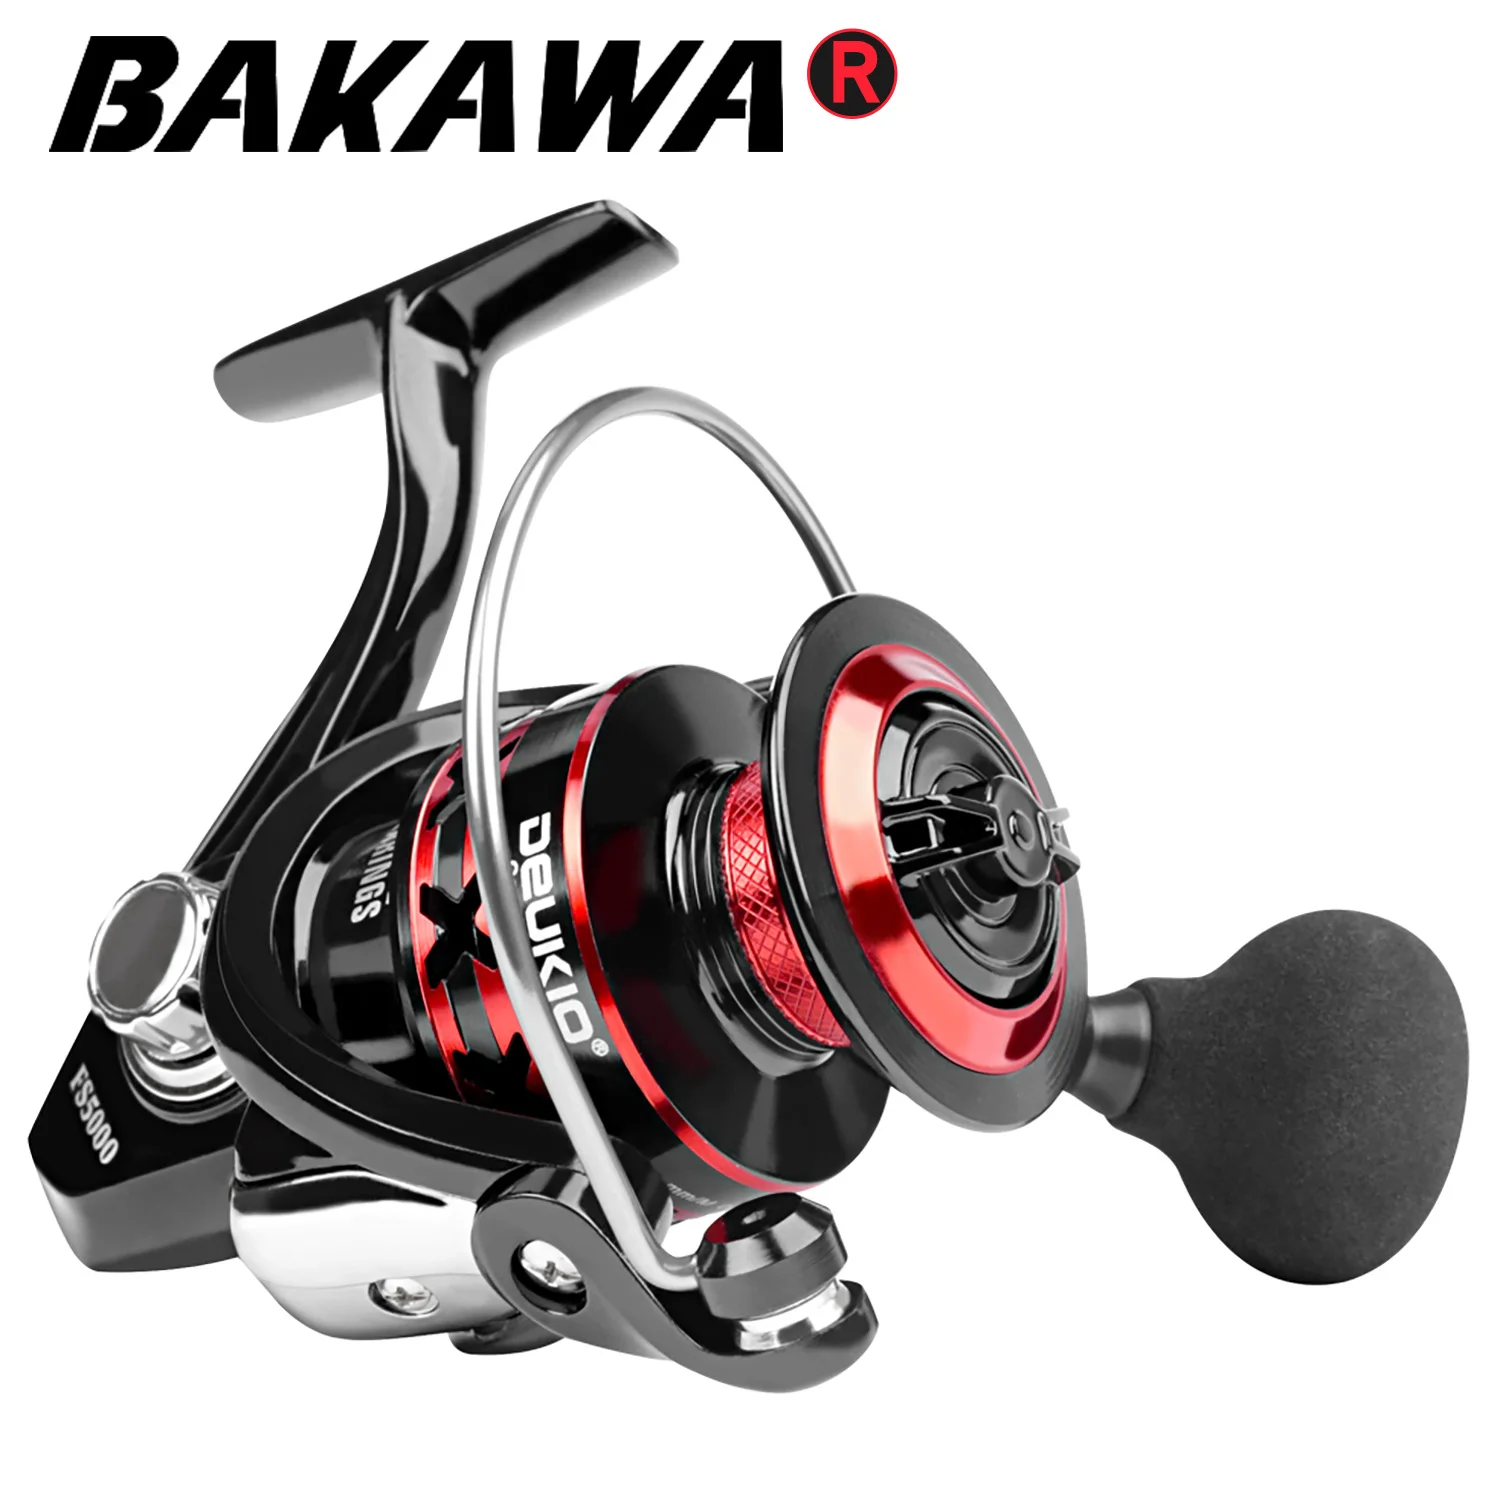 

BAKAWA Pesca FS2000-7000 Spinning Fishing Reel All Metal Spool 5.0：1 Double Gear Ratio Wheel Casting Carp For Saltwater